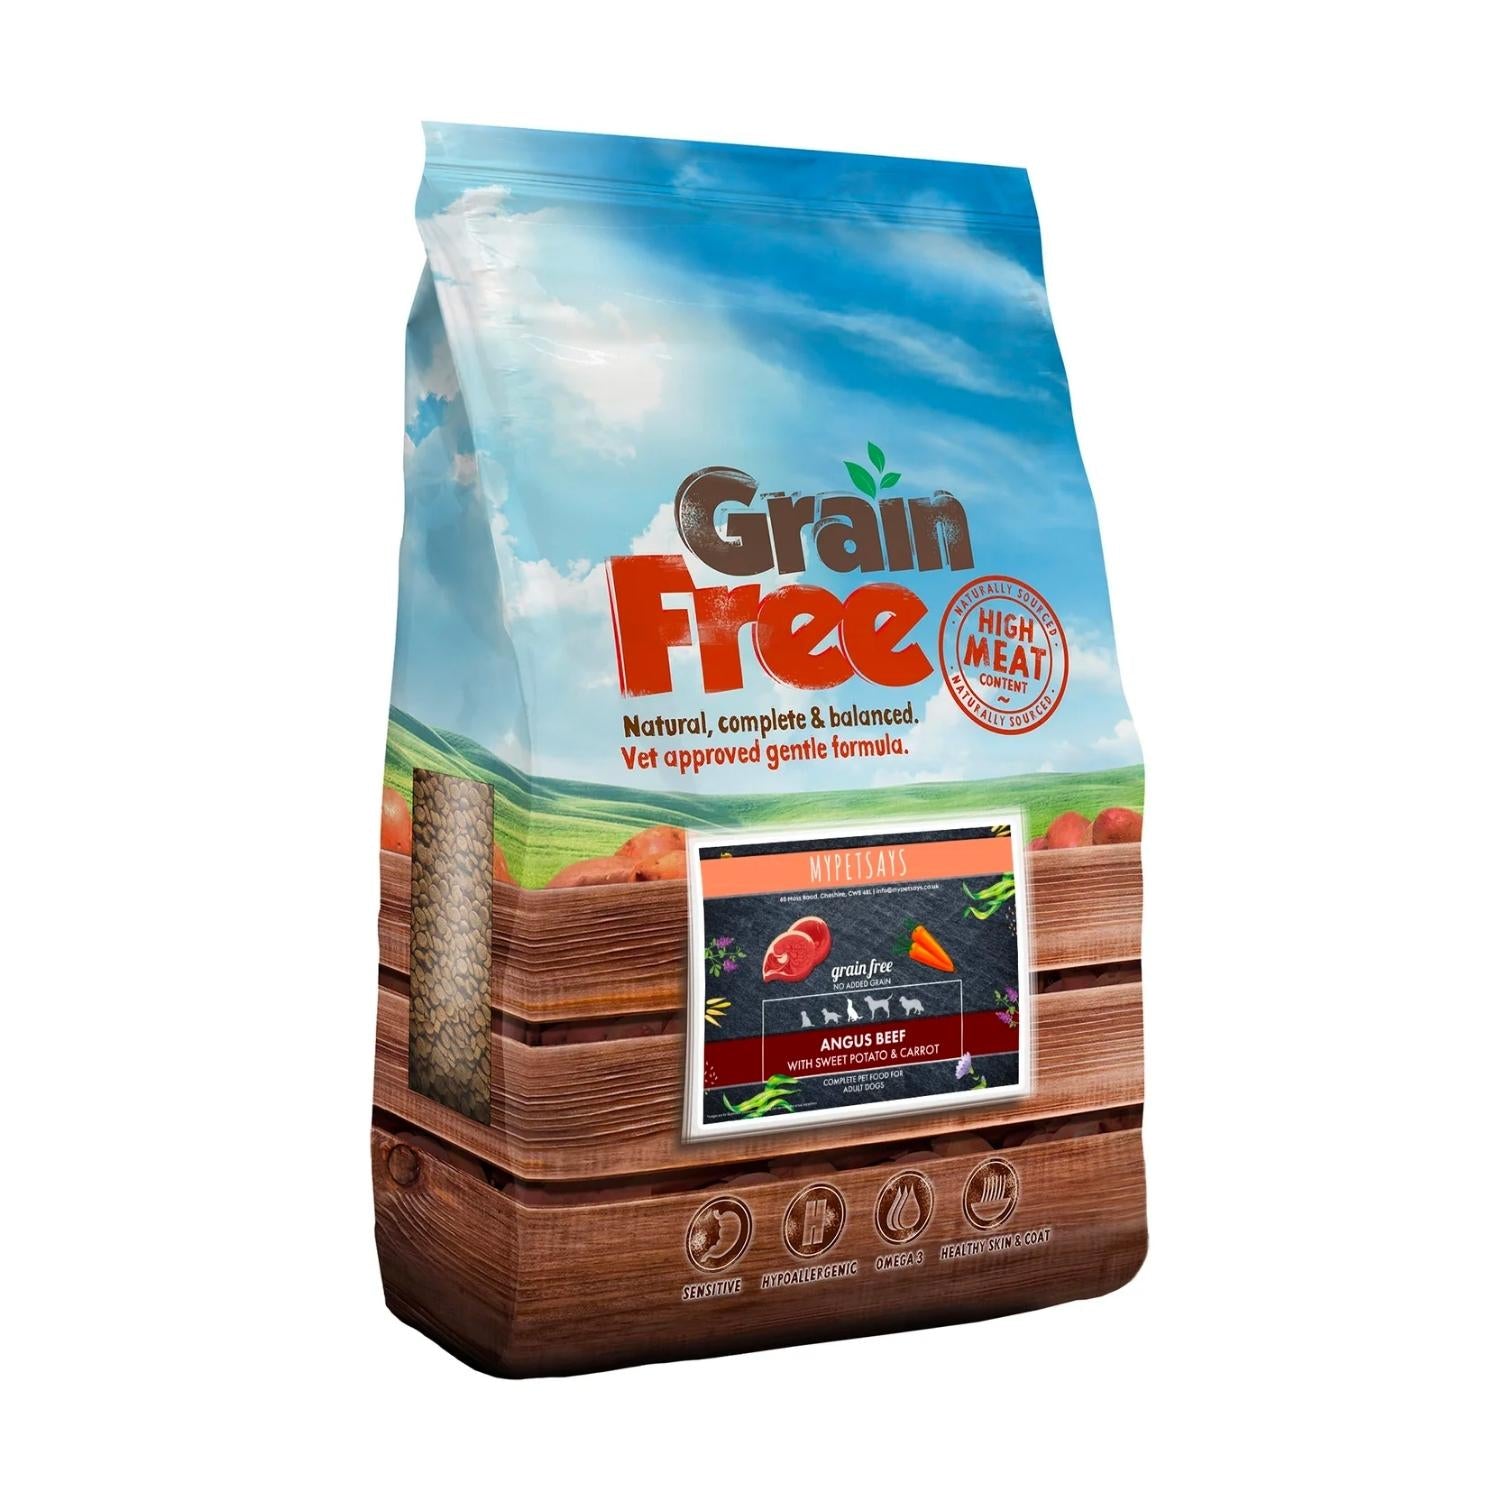 Grain Free Dog Food - Angus Beef with Carrot